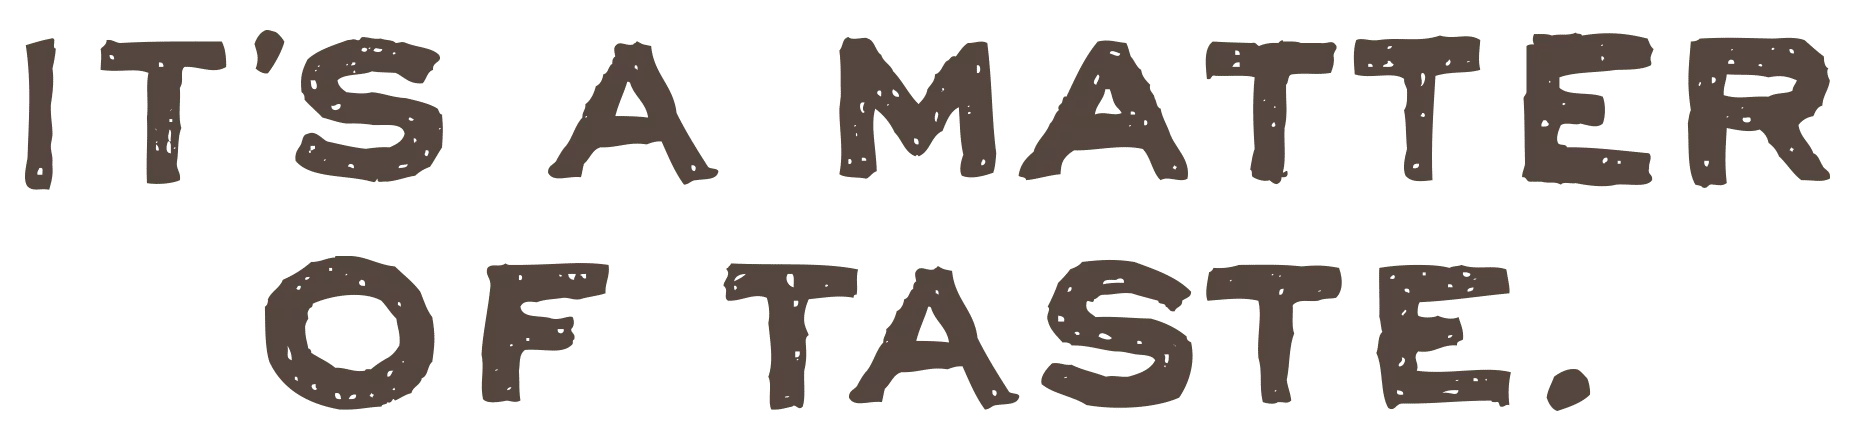 ItsAMatterOfTaste logo stacked 1